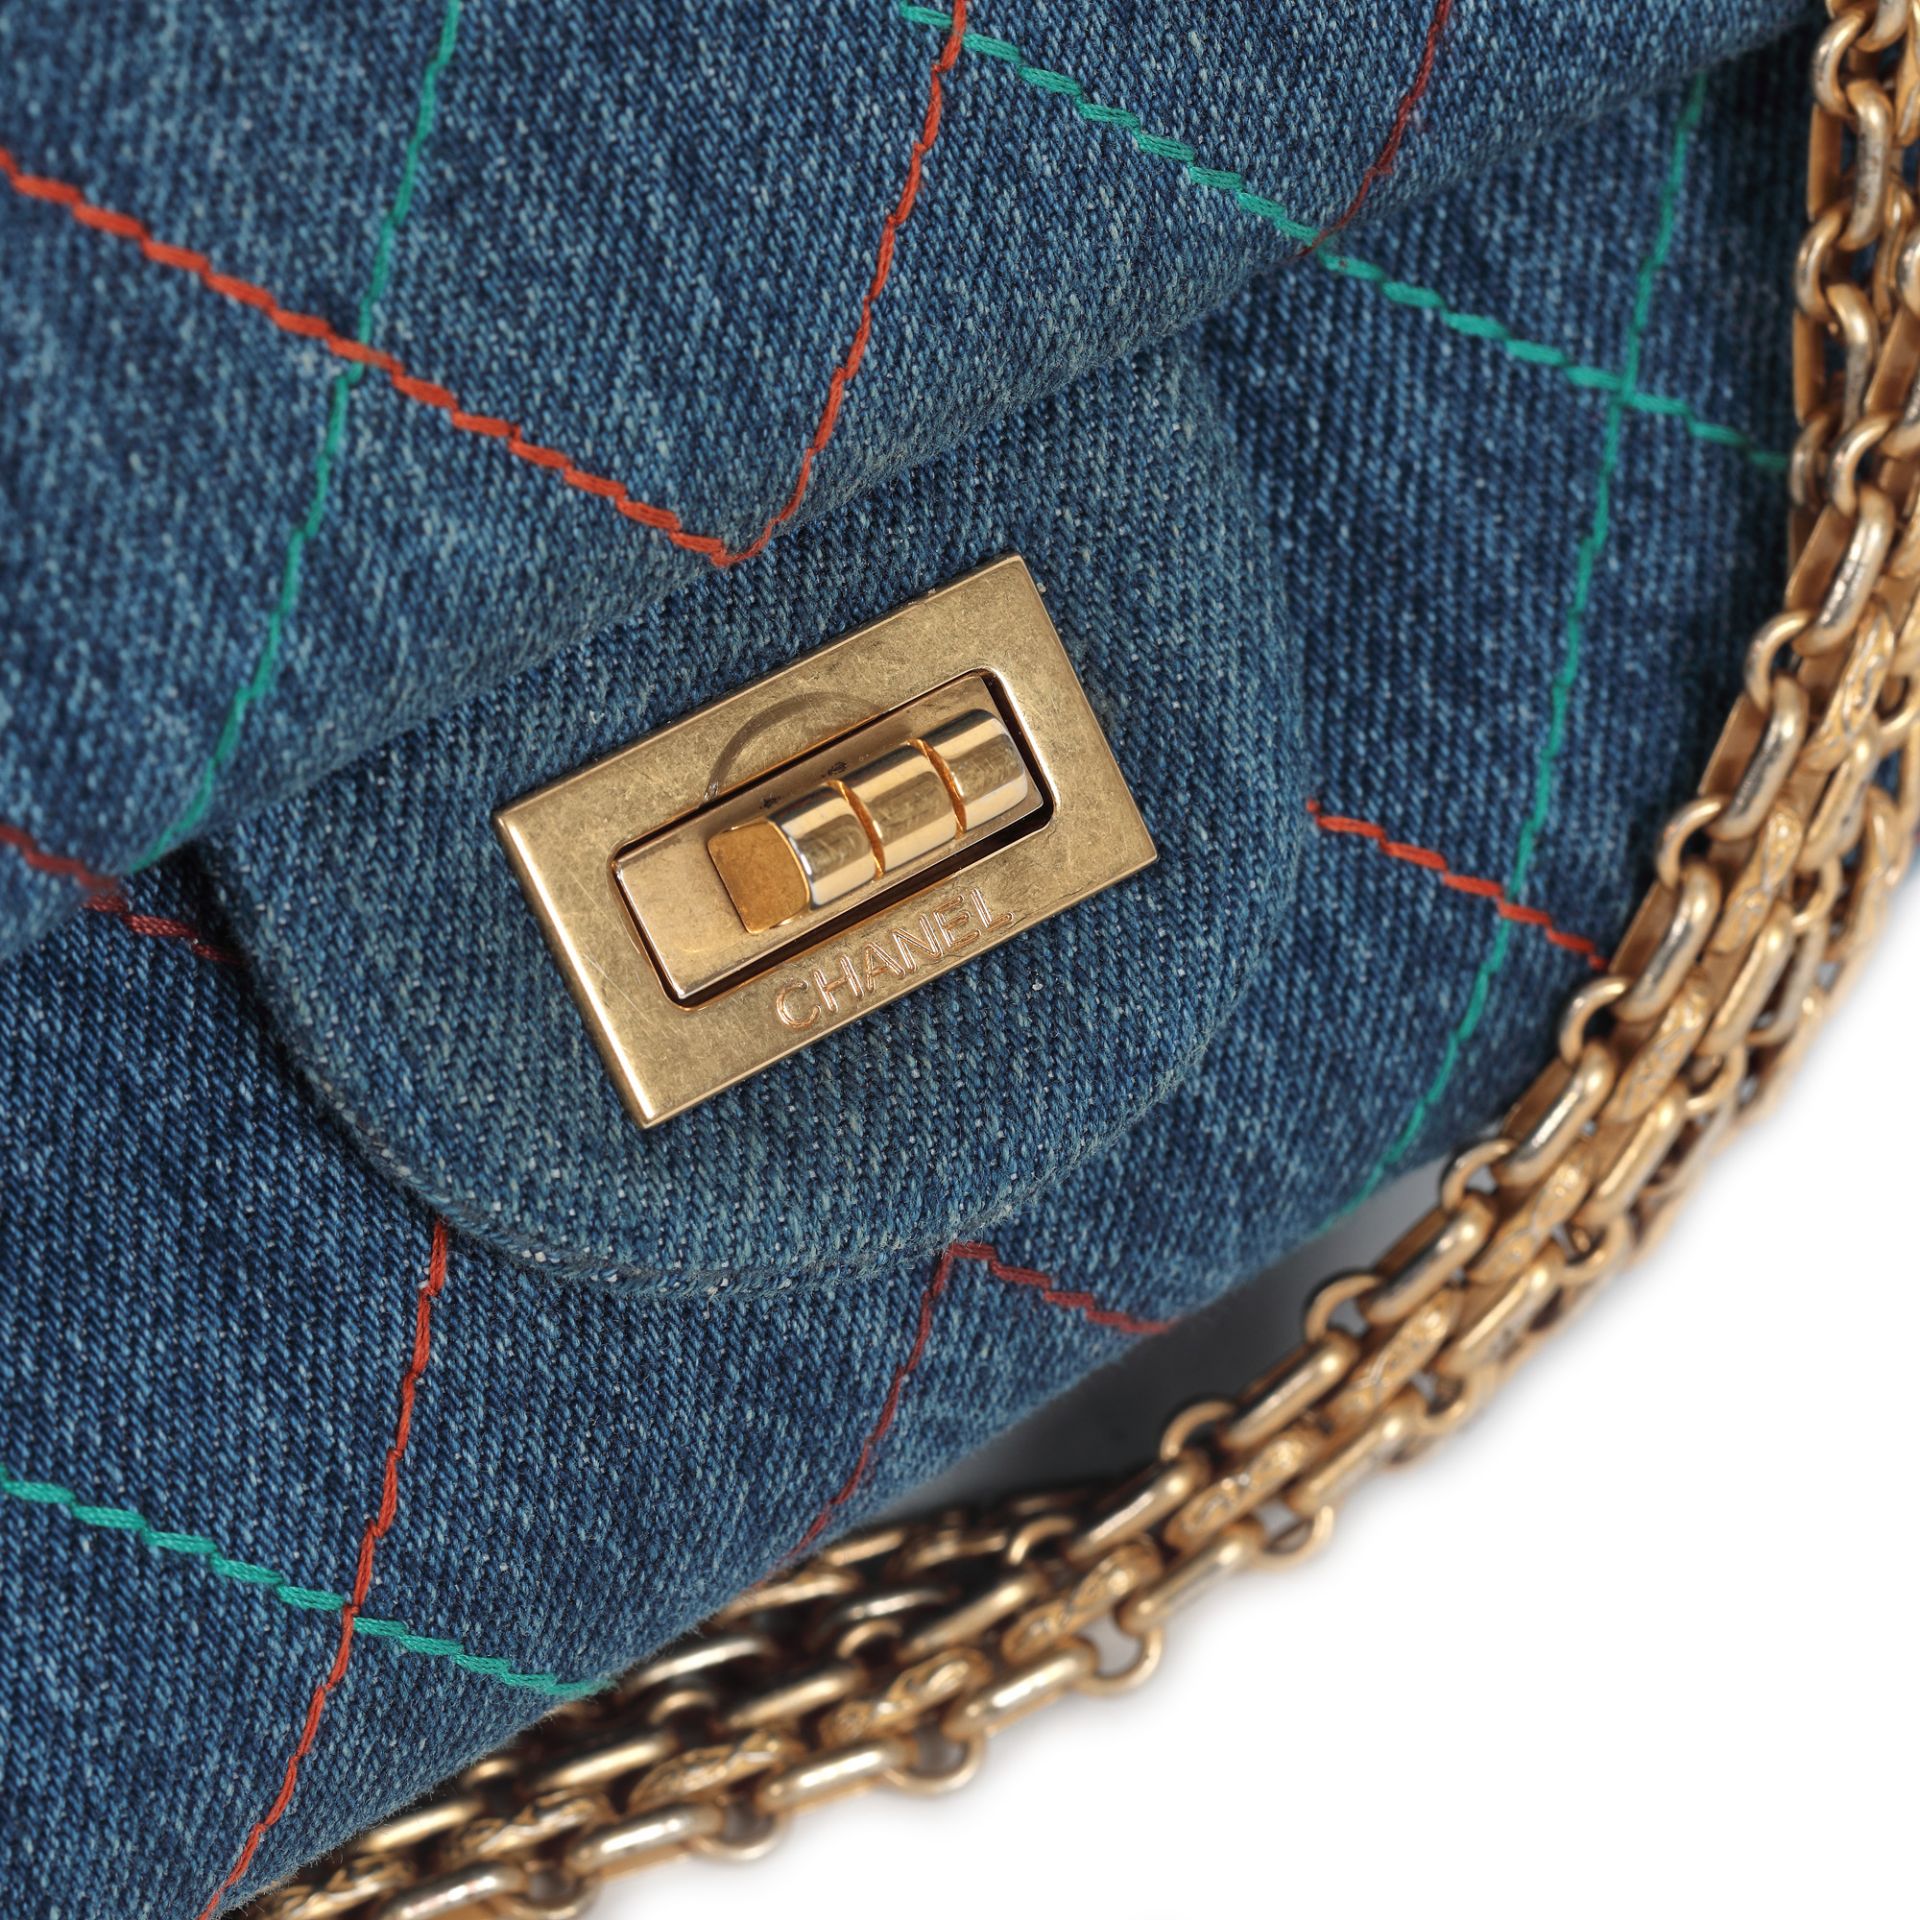 "Reissue 2.55 Flap Bag" - Chanel bag, denim, authenticity card and original cover - Image 4 of 5